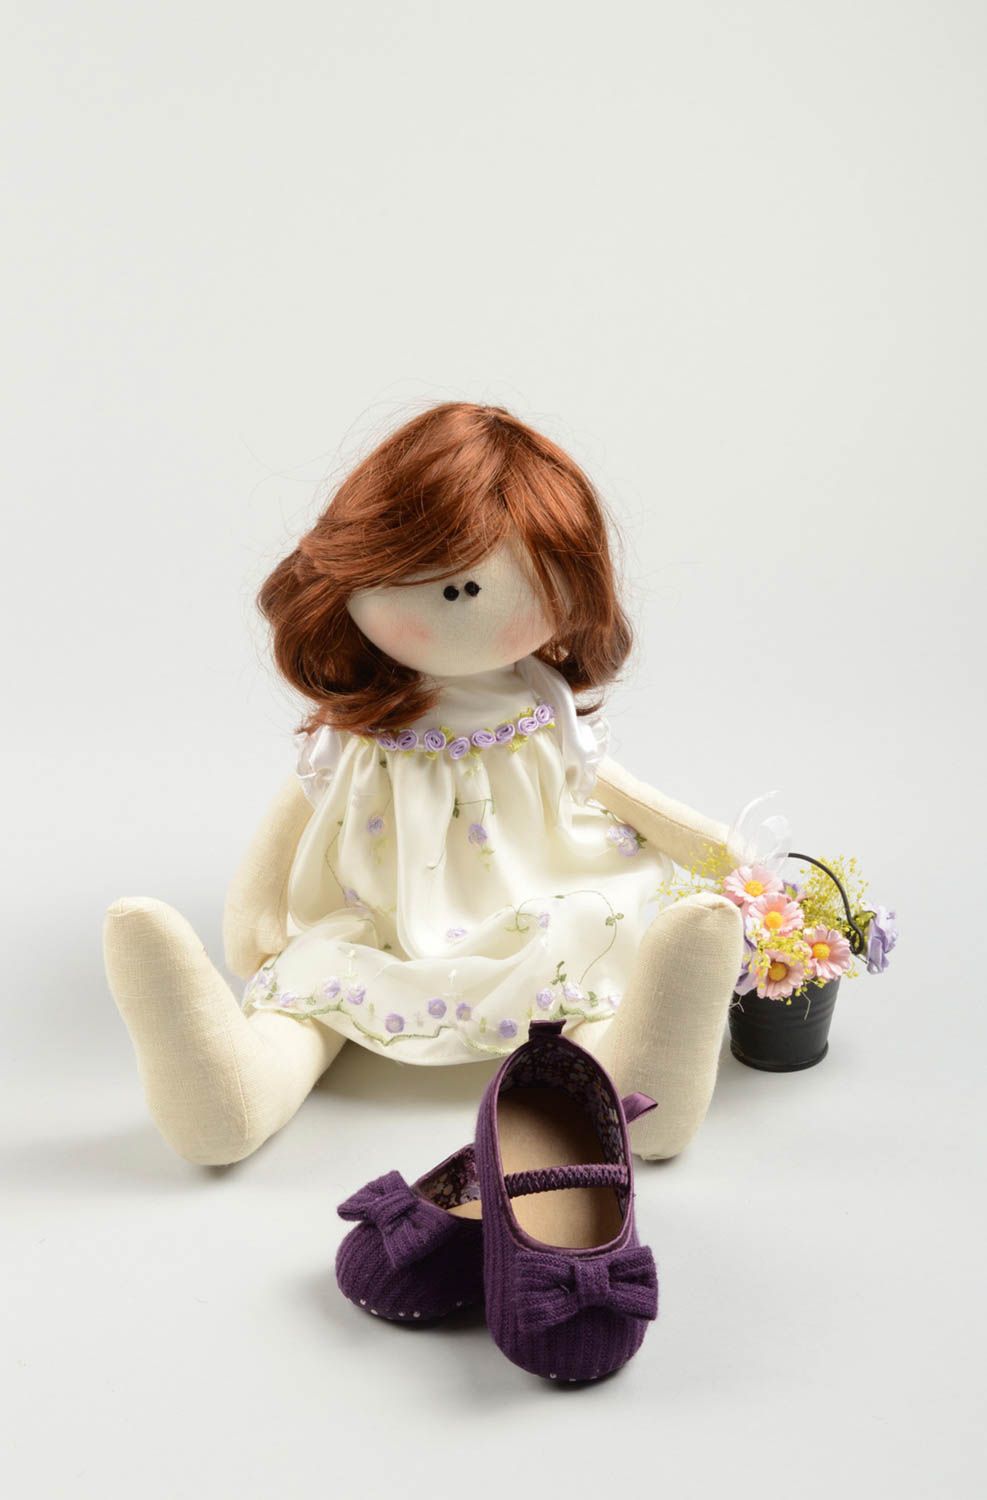 Beautiful handmade rag doll best toys for kids room decor ideas gift ideas photo 4